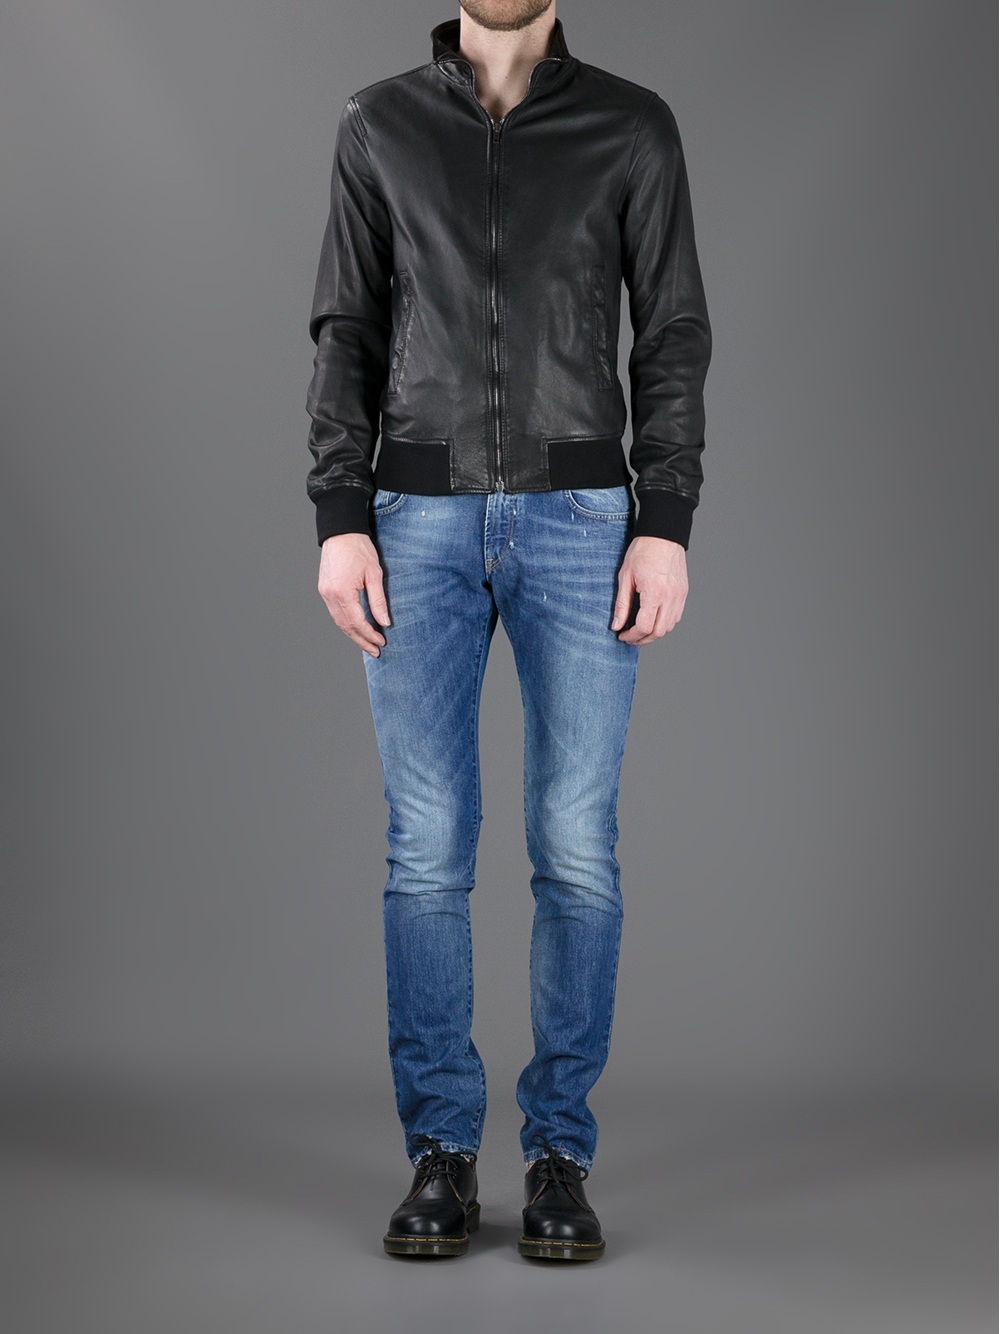 Dolce & Gabbana Leather Jacket in Black for Men - Lyst